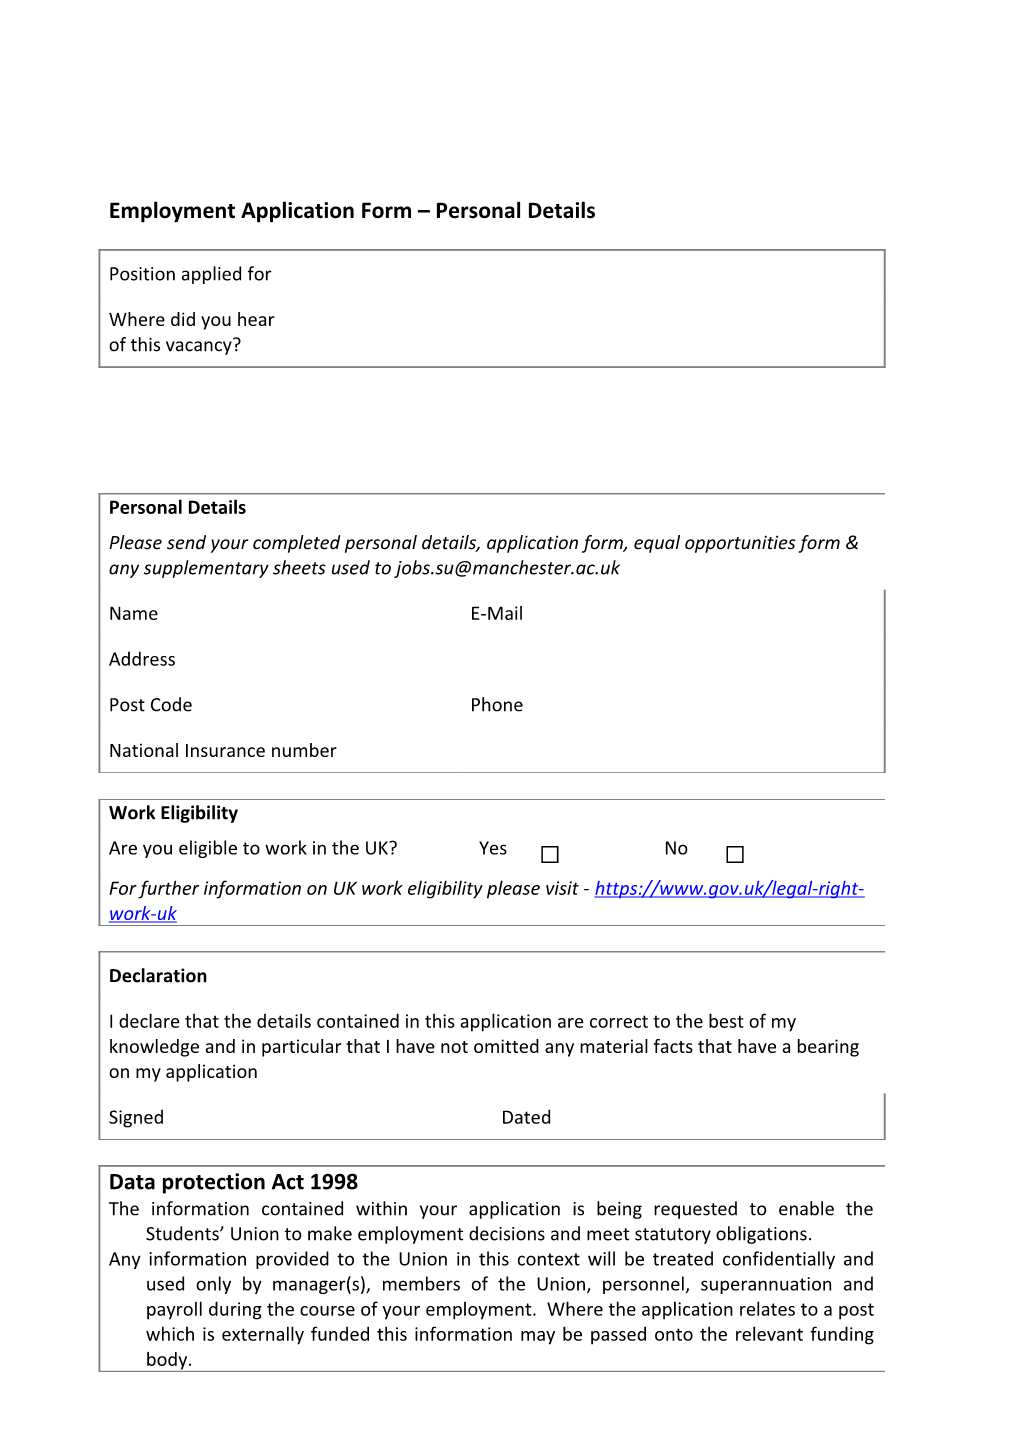 Employment Application Form Personal Details s1